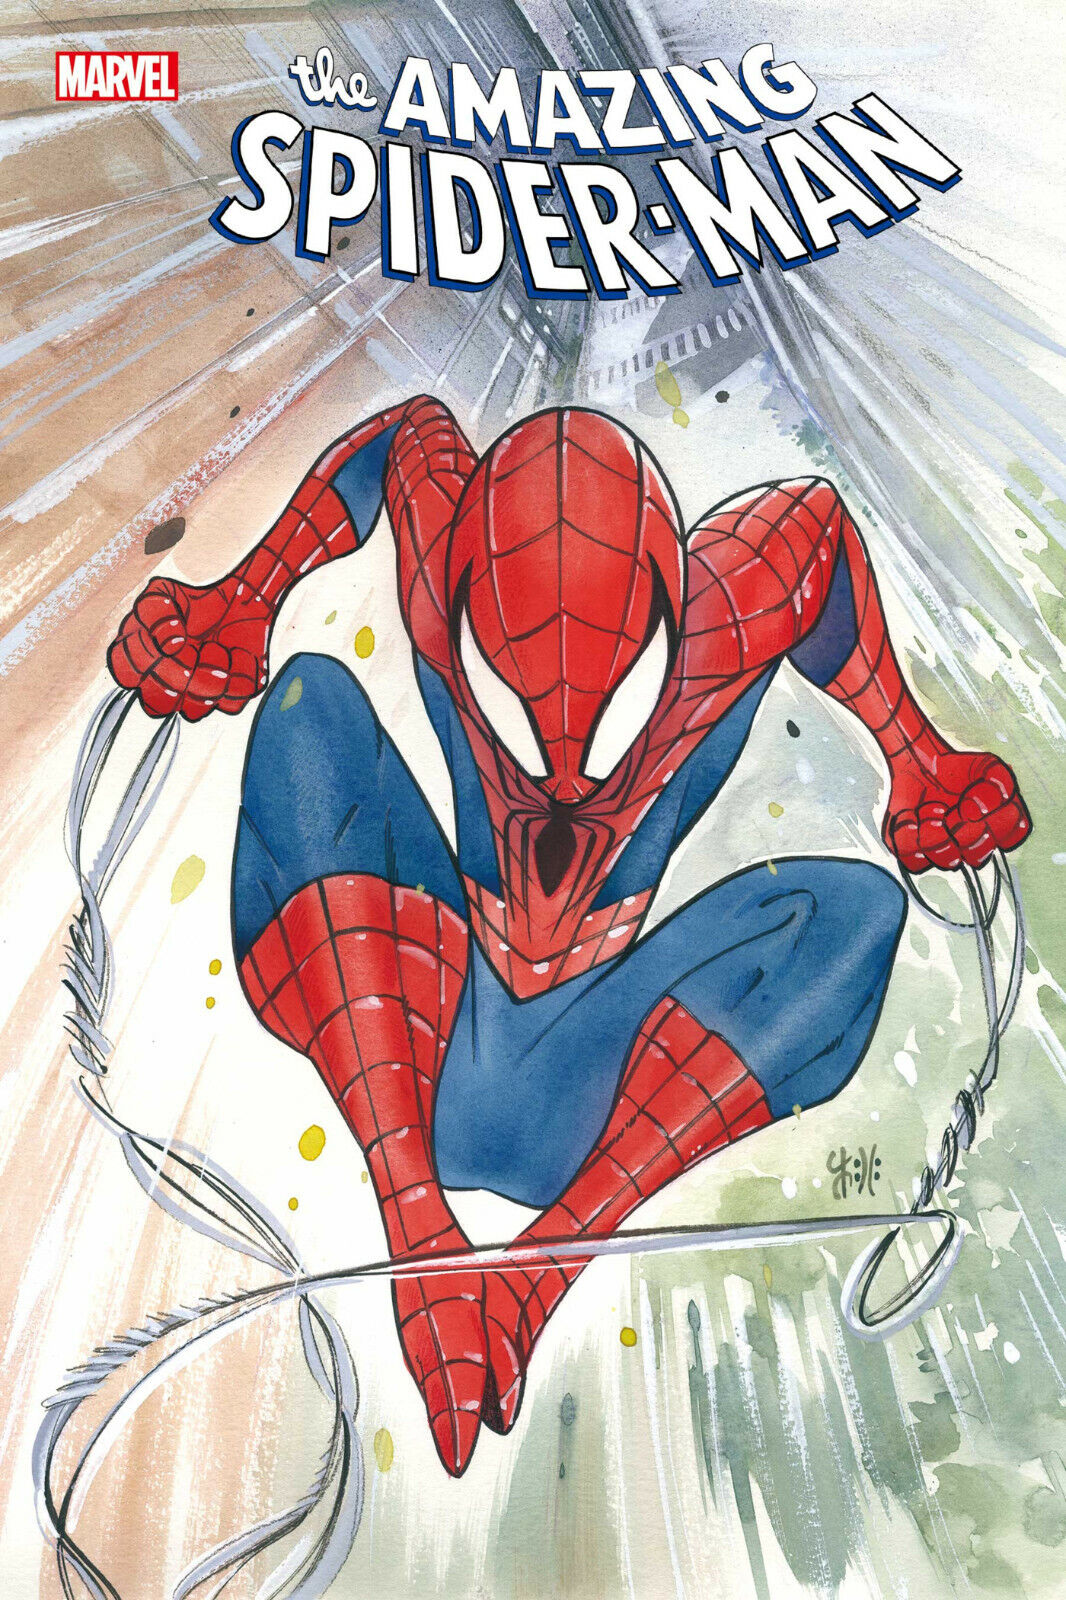 AMAZING SPIDER-MAN #1 (PEACH MOMOKO VARIANT) COMIC BOOK PRE-SALE